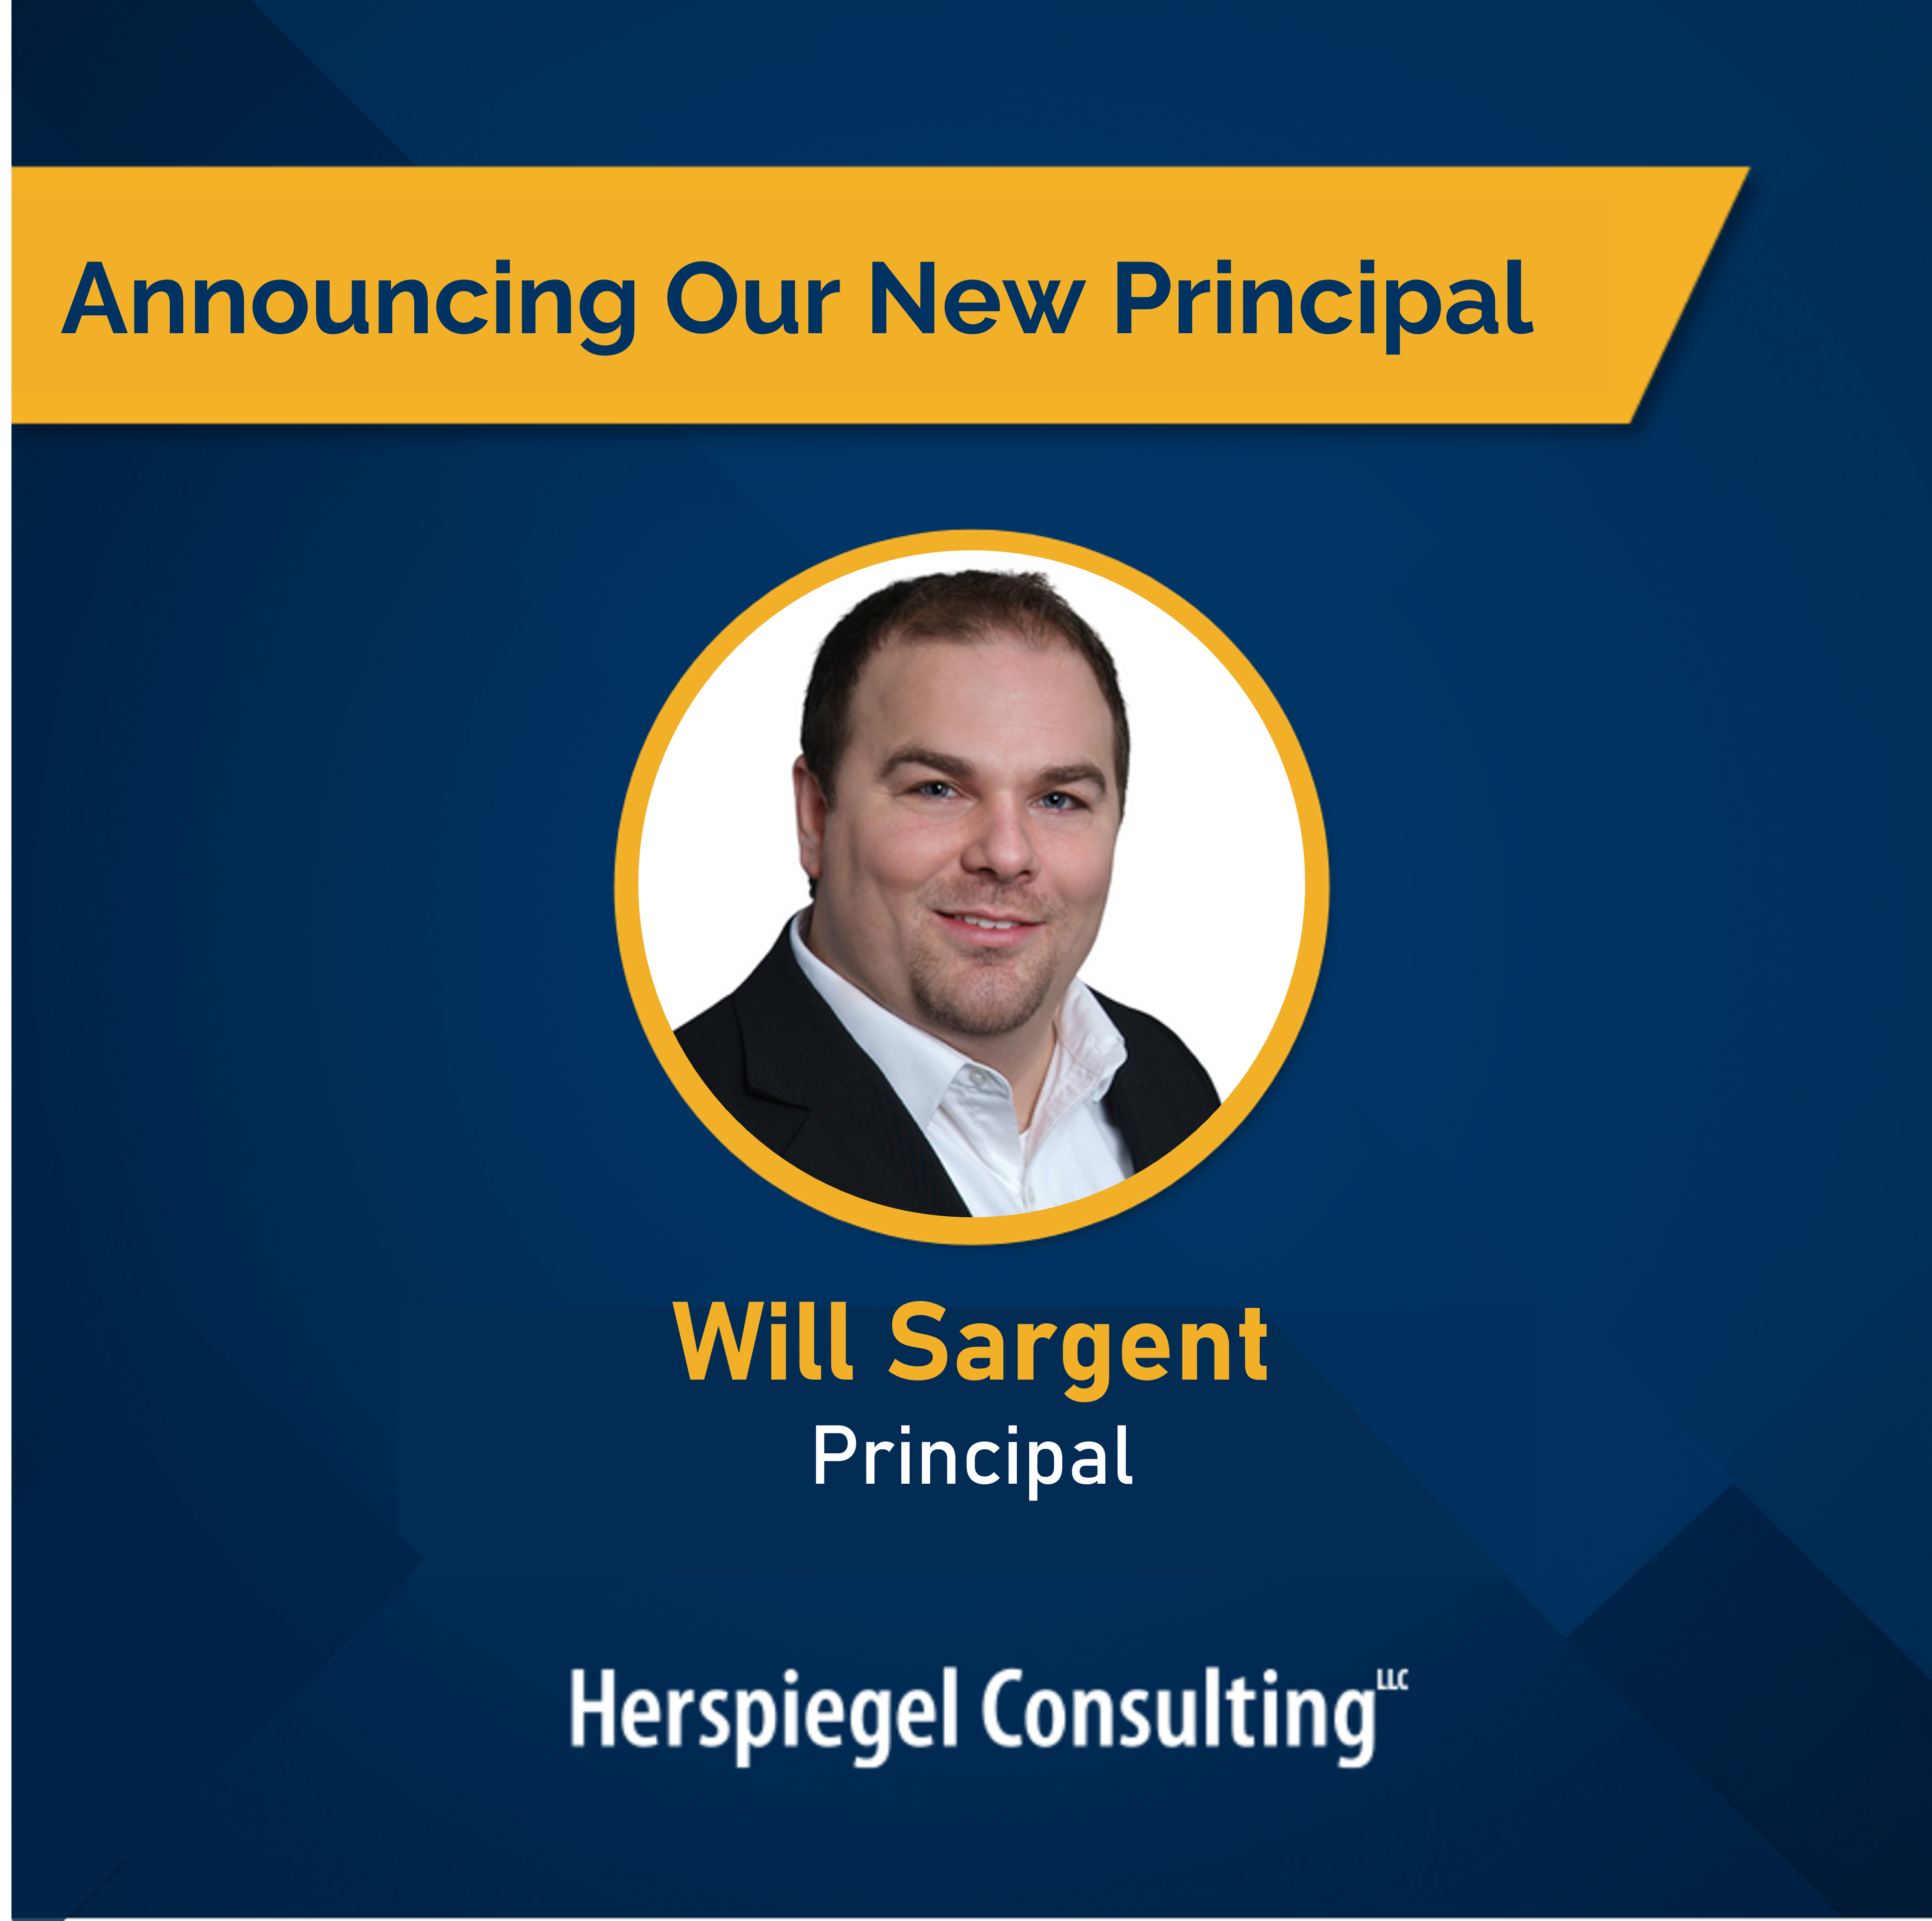 Will Sargent, Principal